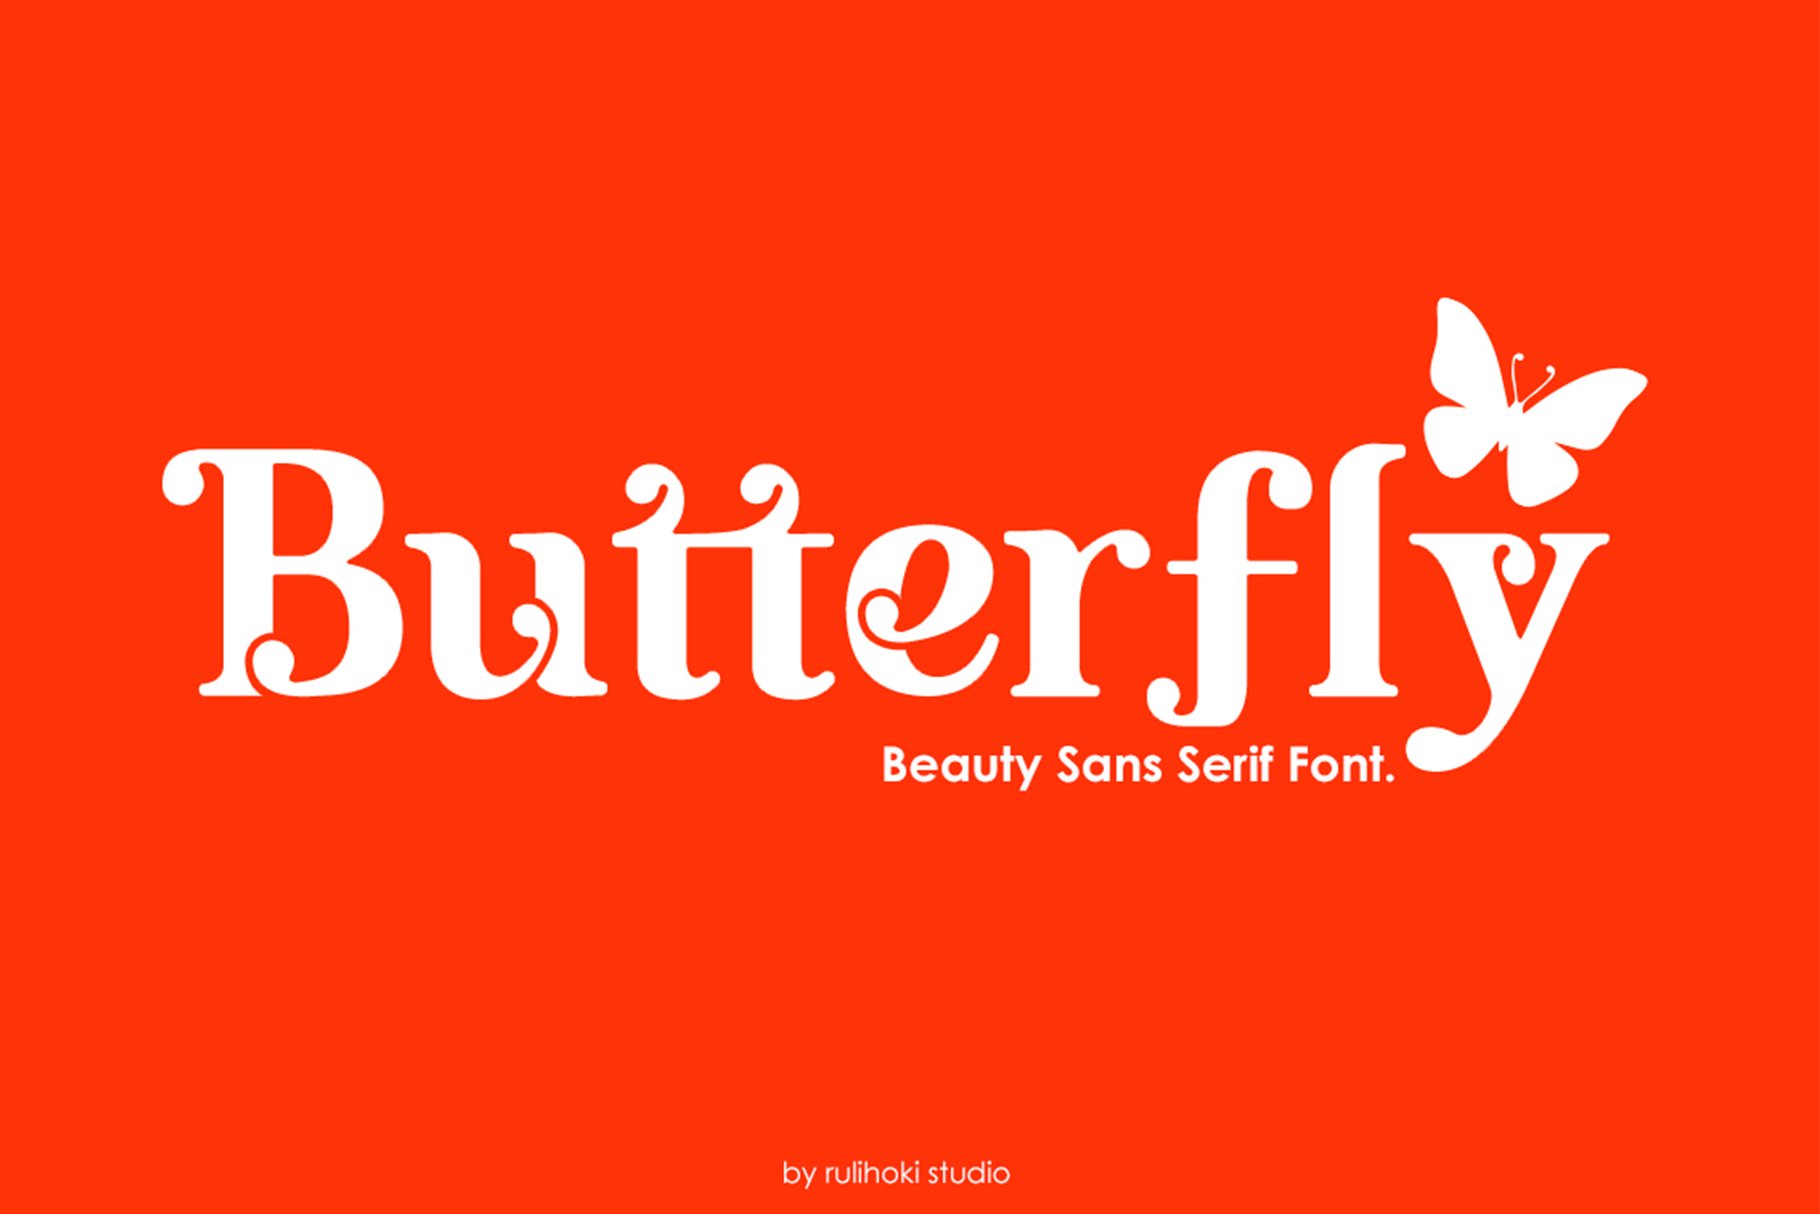 Butterfly | Beauty Sans Serif Font cover image.